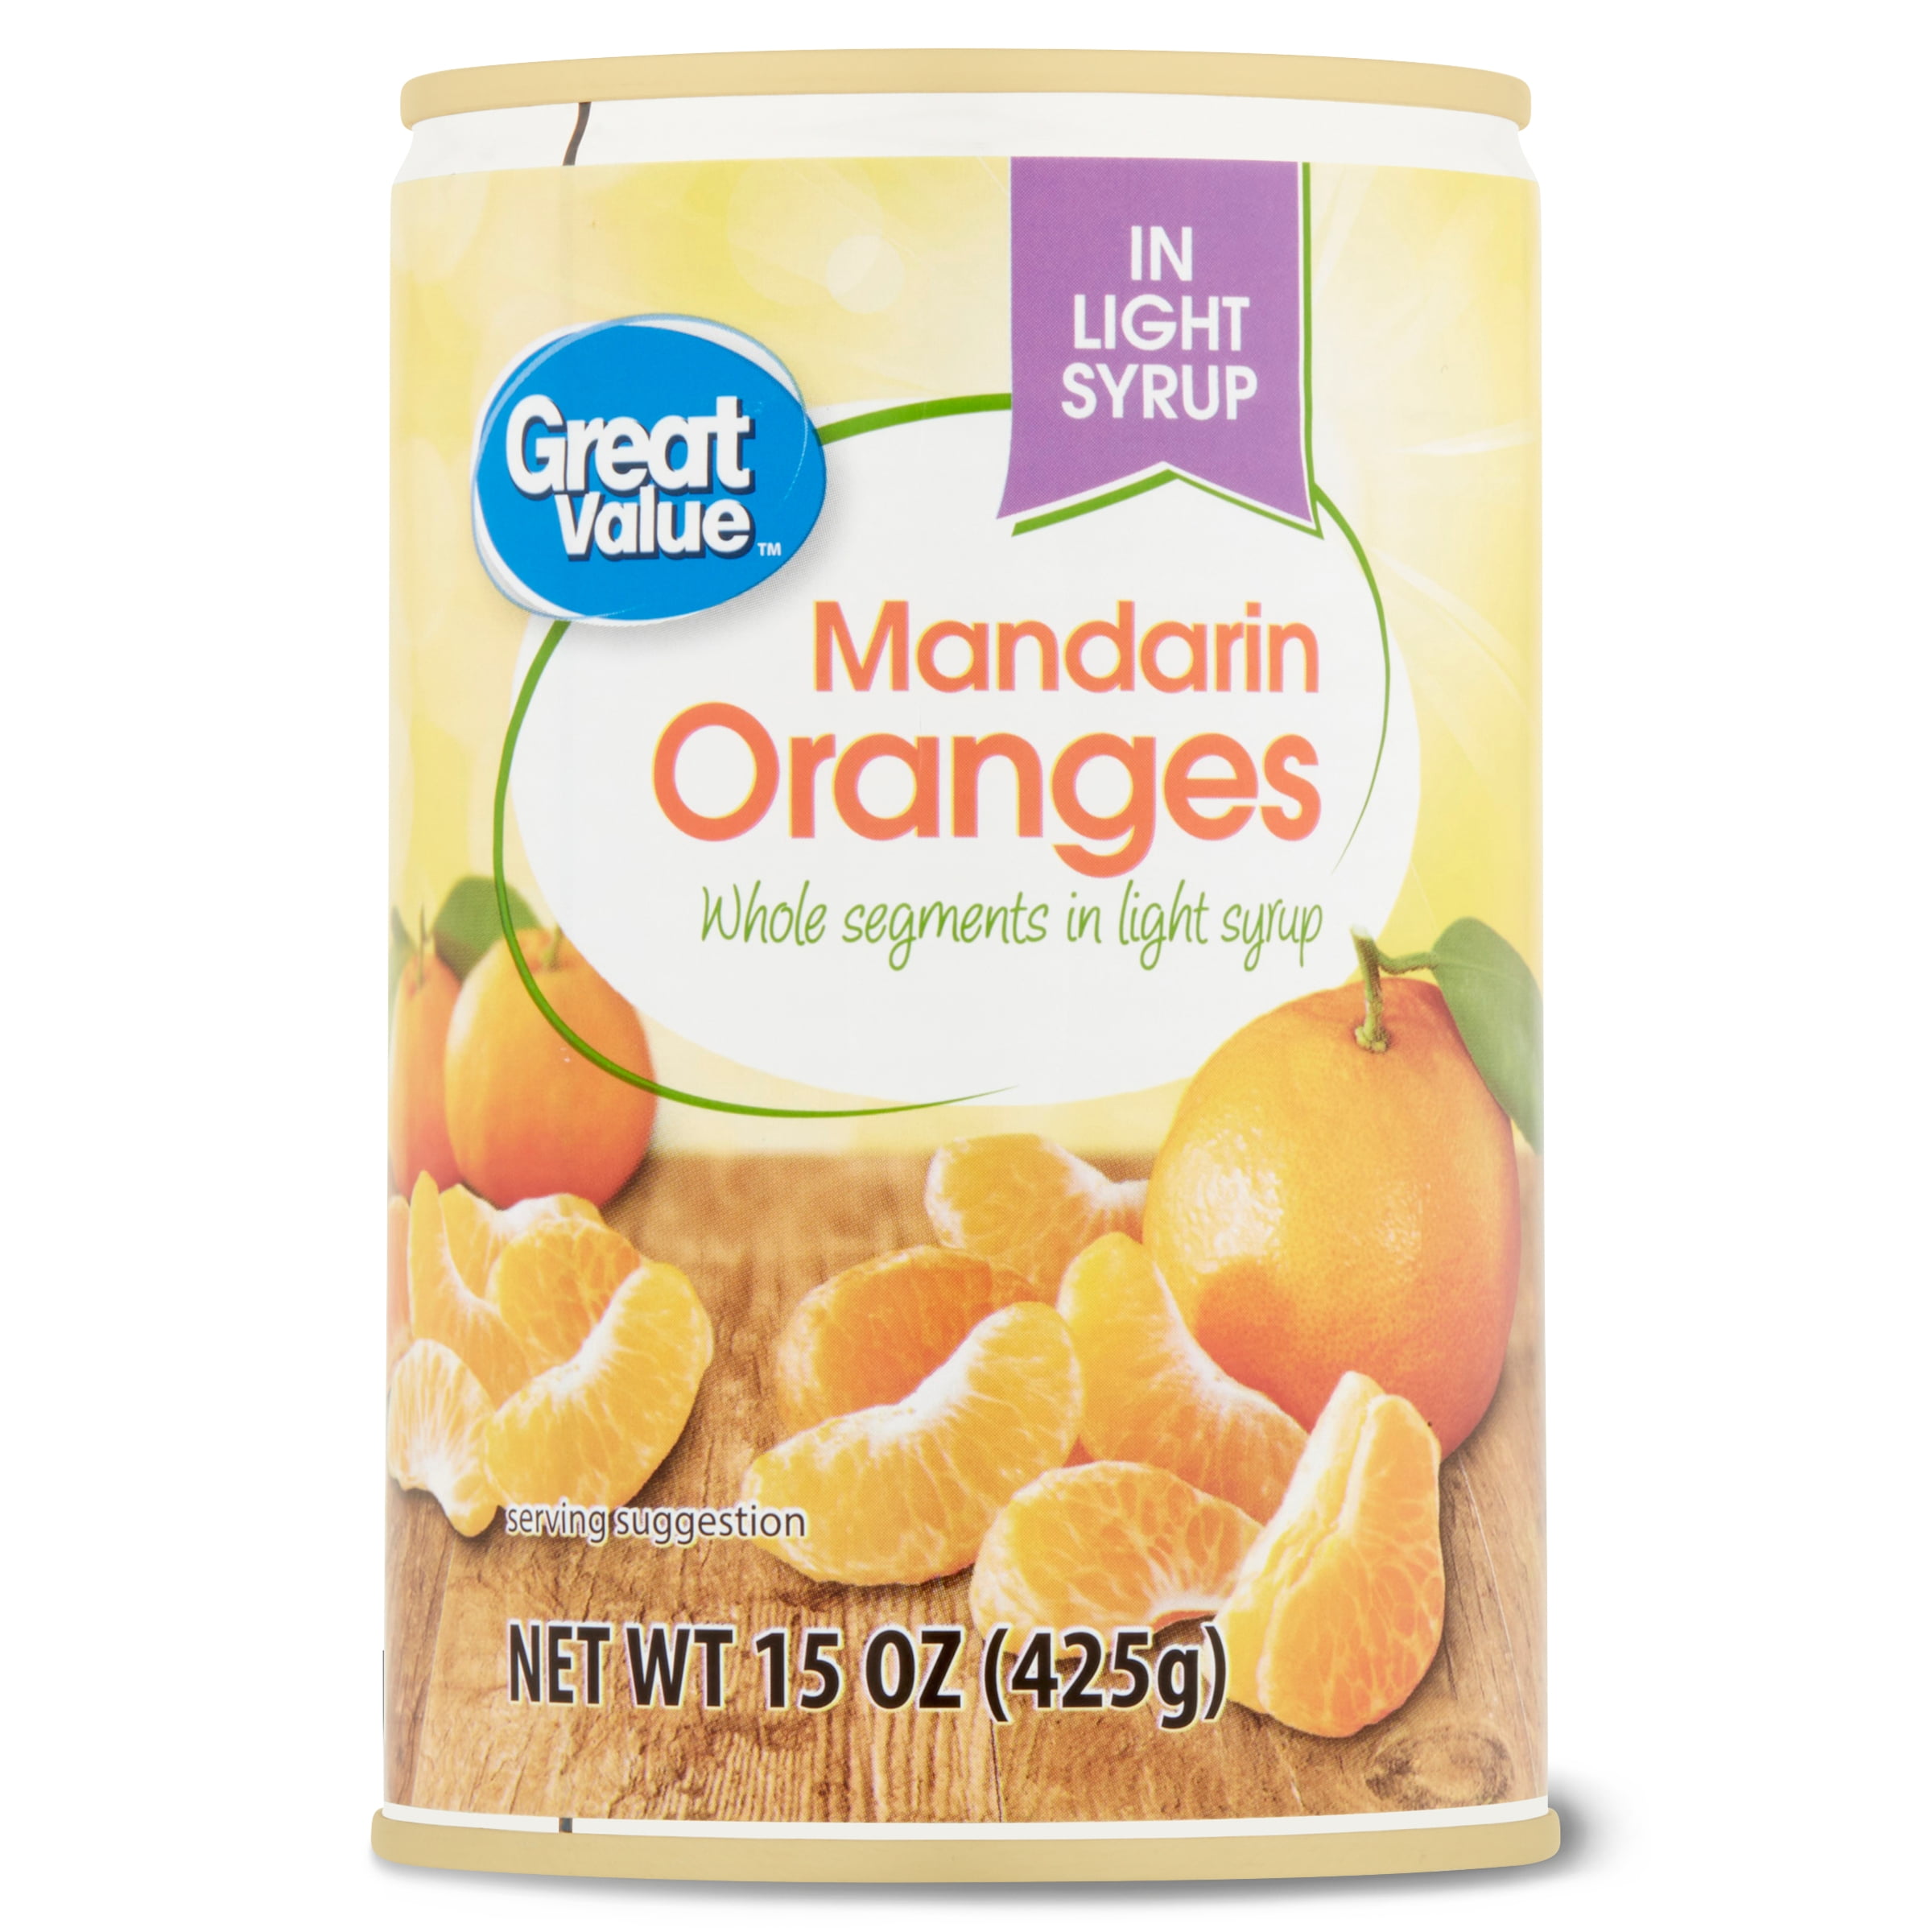 Great Value Mandarin Oranges in Light Syrup, 15 oz